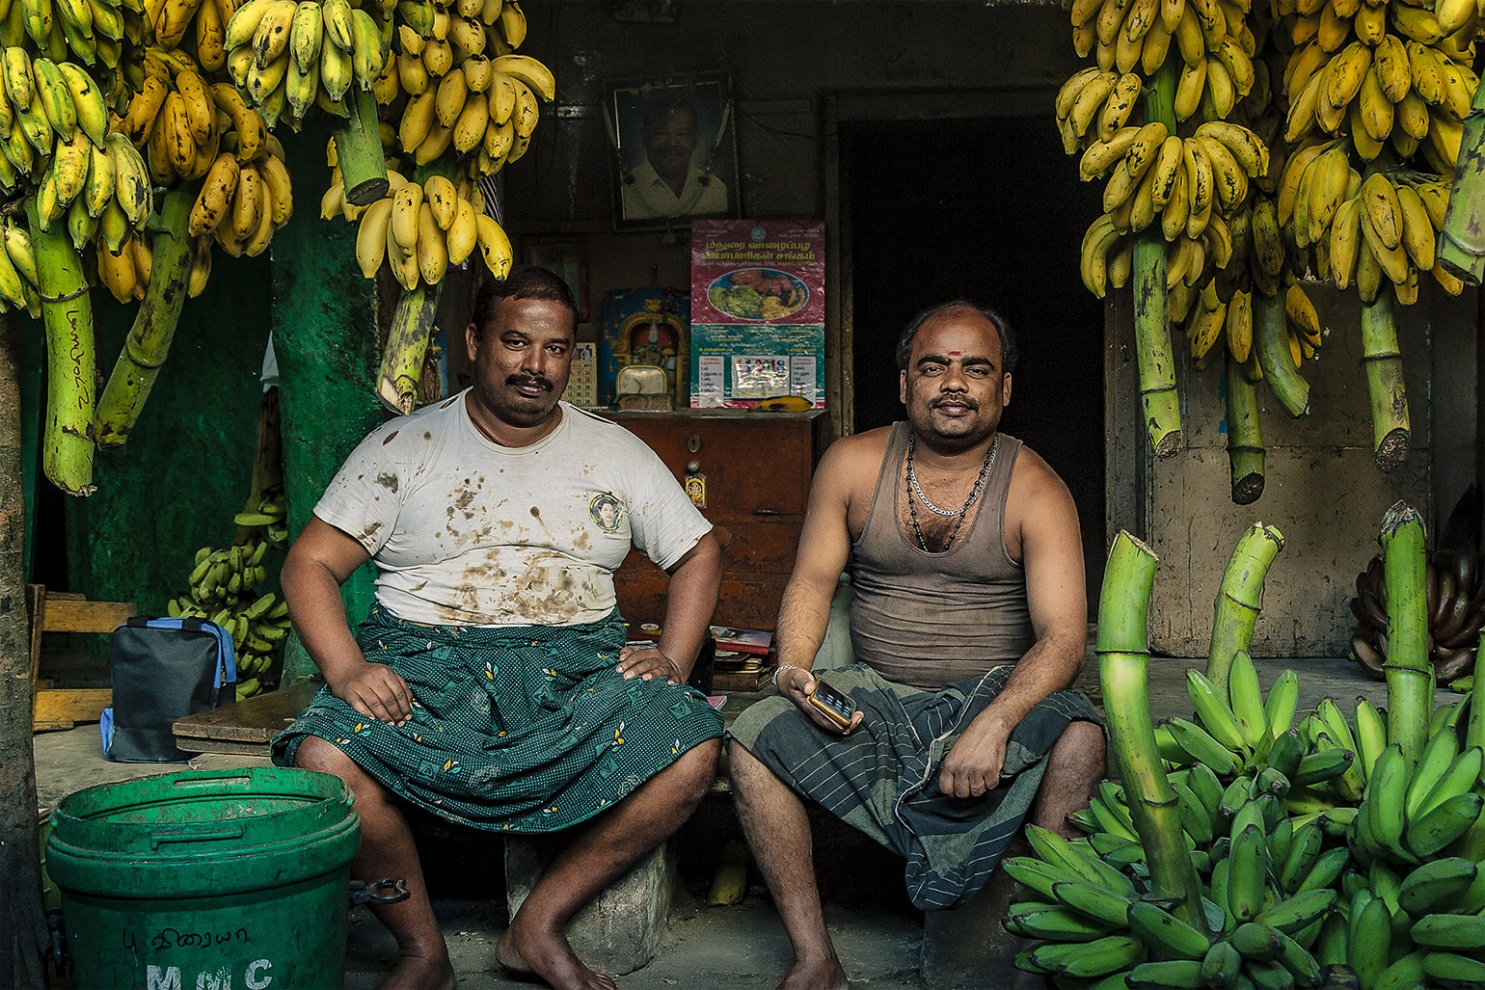 Banana men
Madurai fruit market, Tamil Nadu 2012
digital photography
